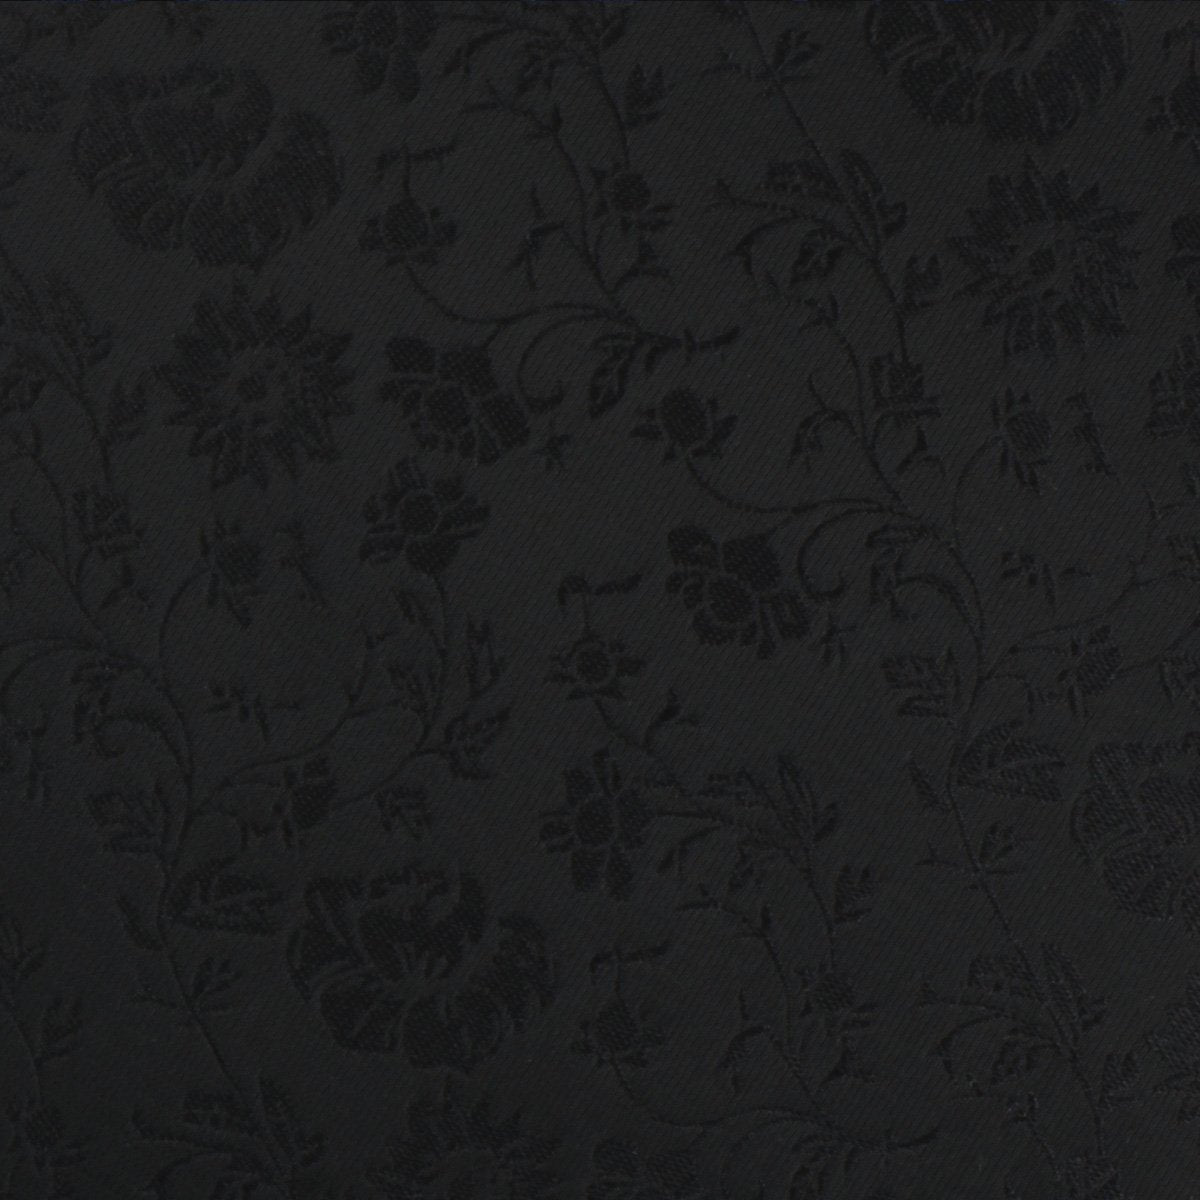 Midnight Black Floral Fabric Swatch